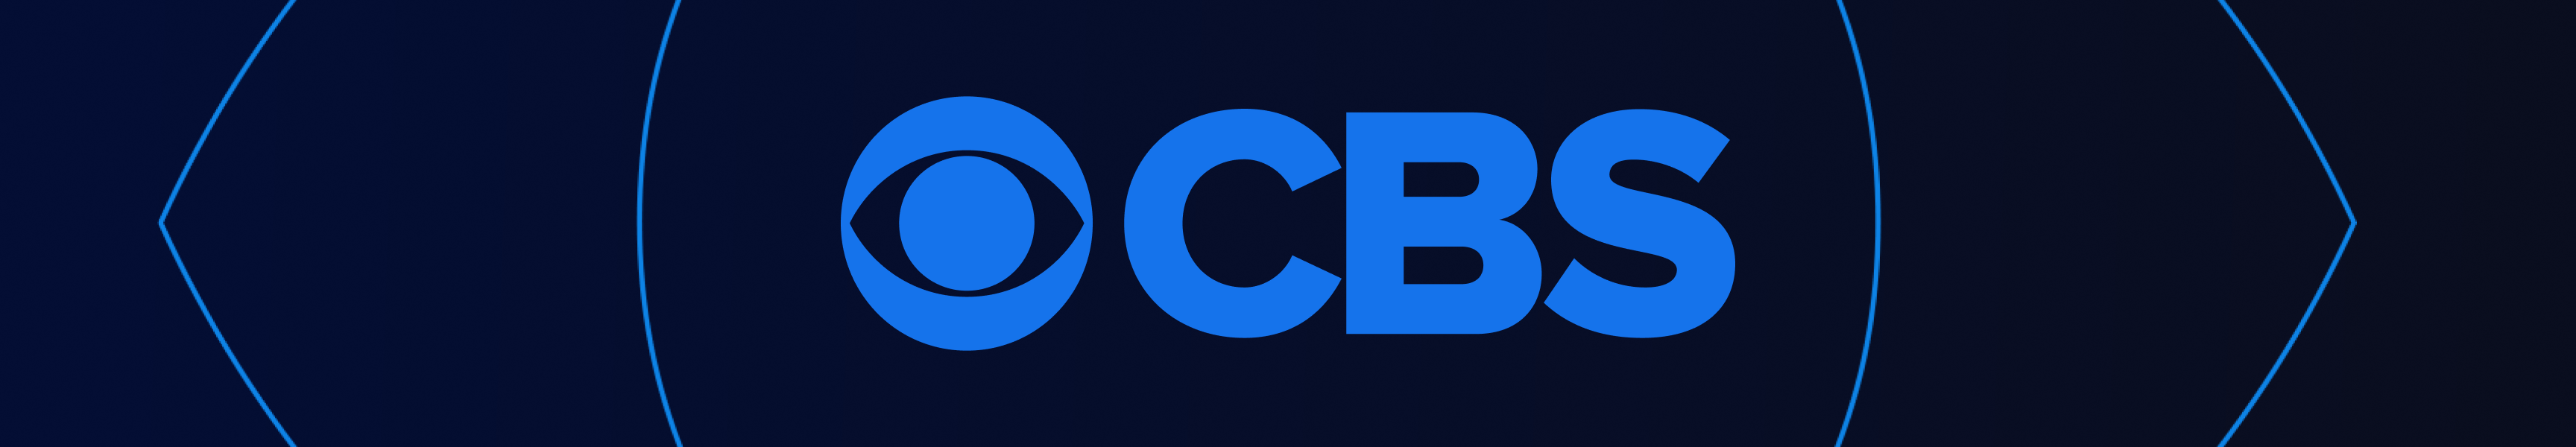 CBS Entertainment Meilleures ventes